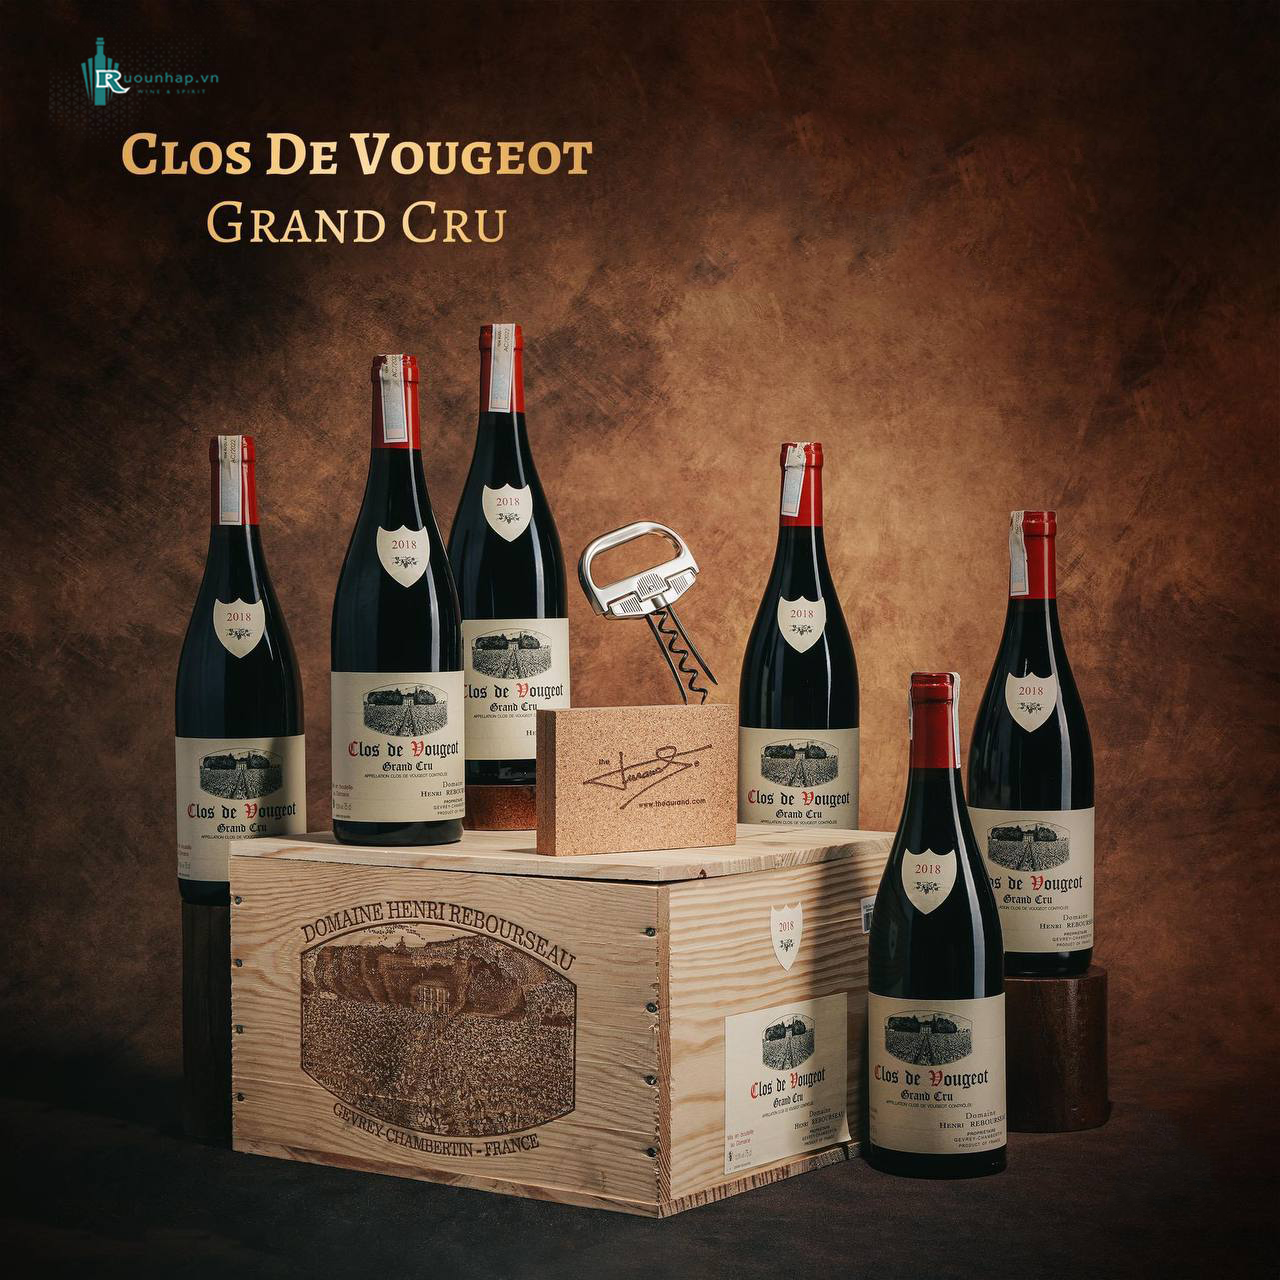 Rượu Vang Domaine Henri Rebourseau Clos De Vougeot Grand Cru 2018